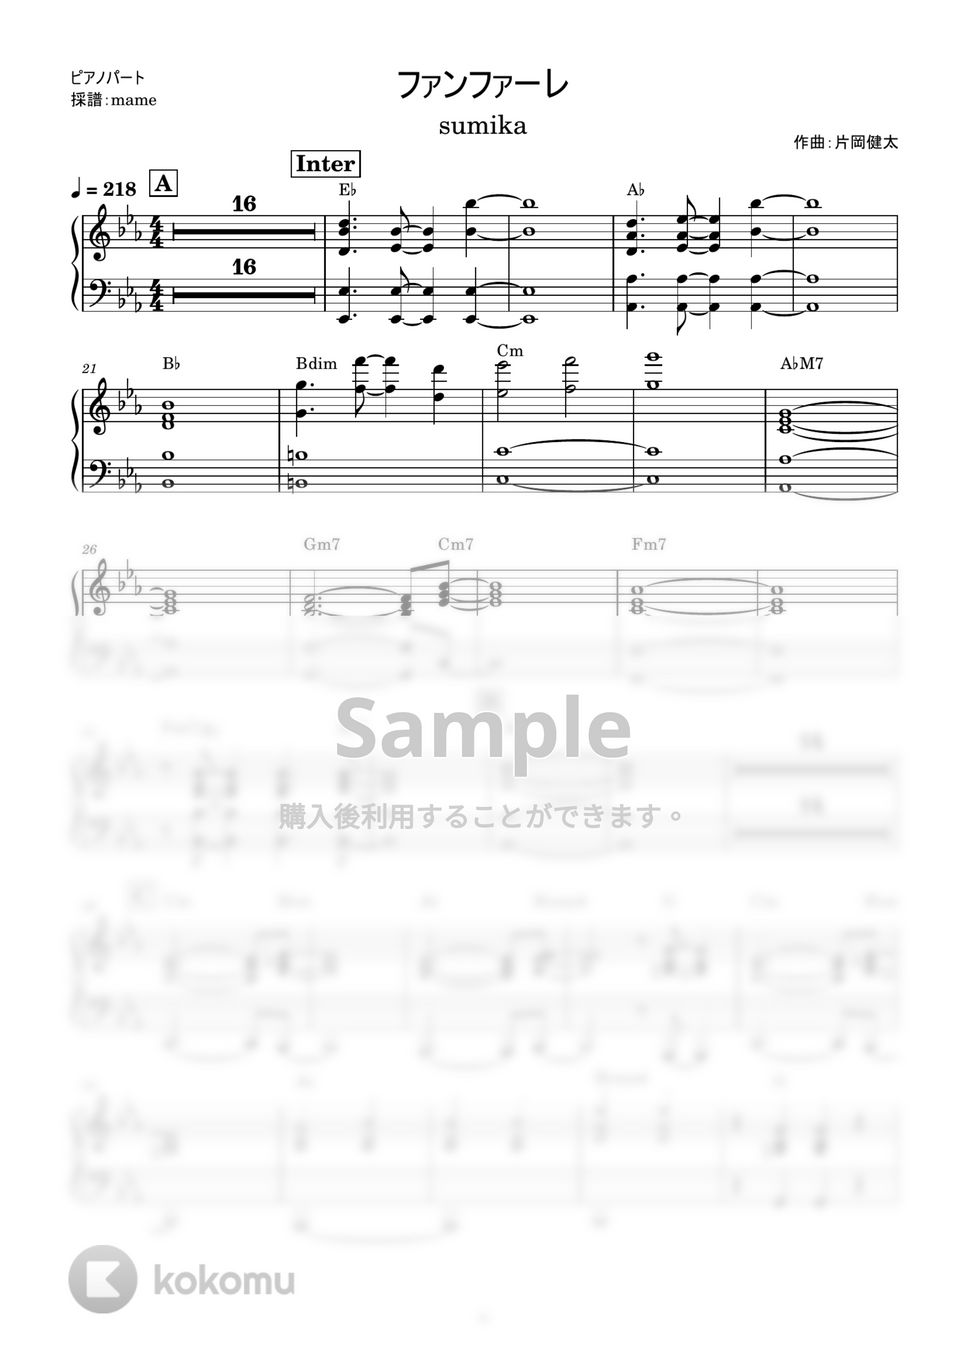 sumika - ファンファーレ (ピアノパート) by mame